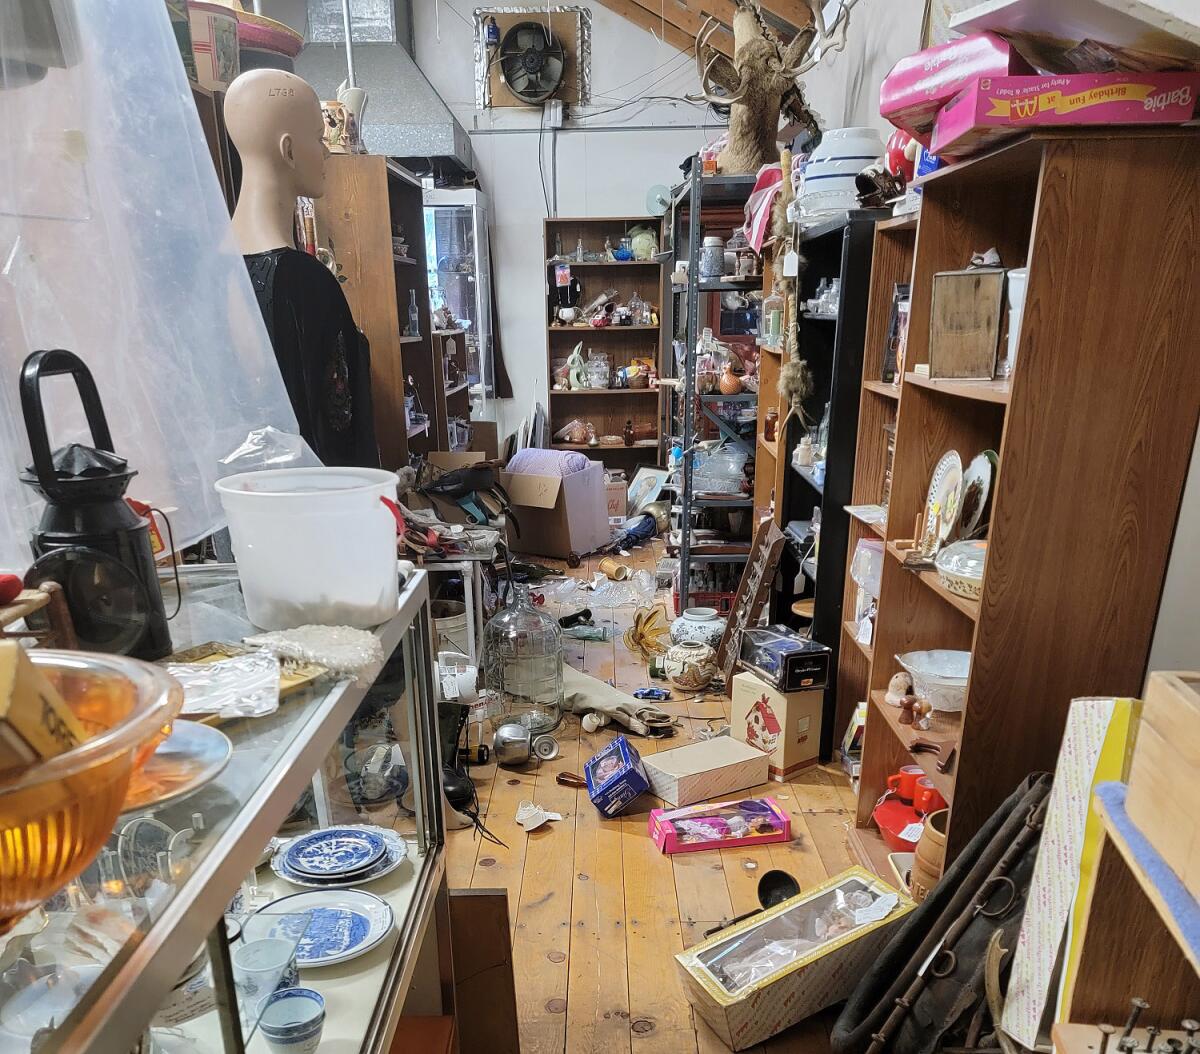 Items were knocked off shelves at the Walker Flea & Farmer's Market following a magnitude 6.0 earthquake 